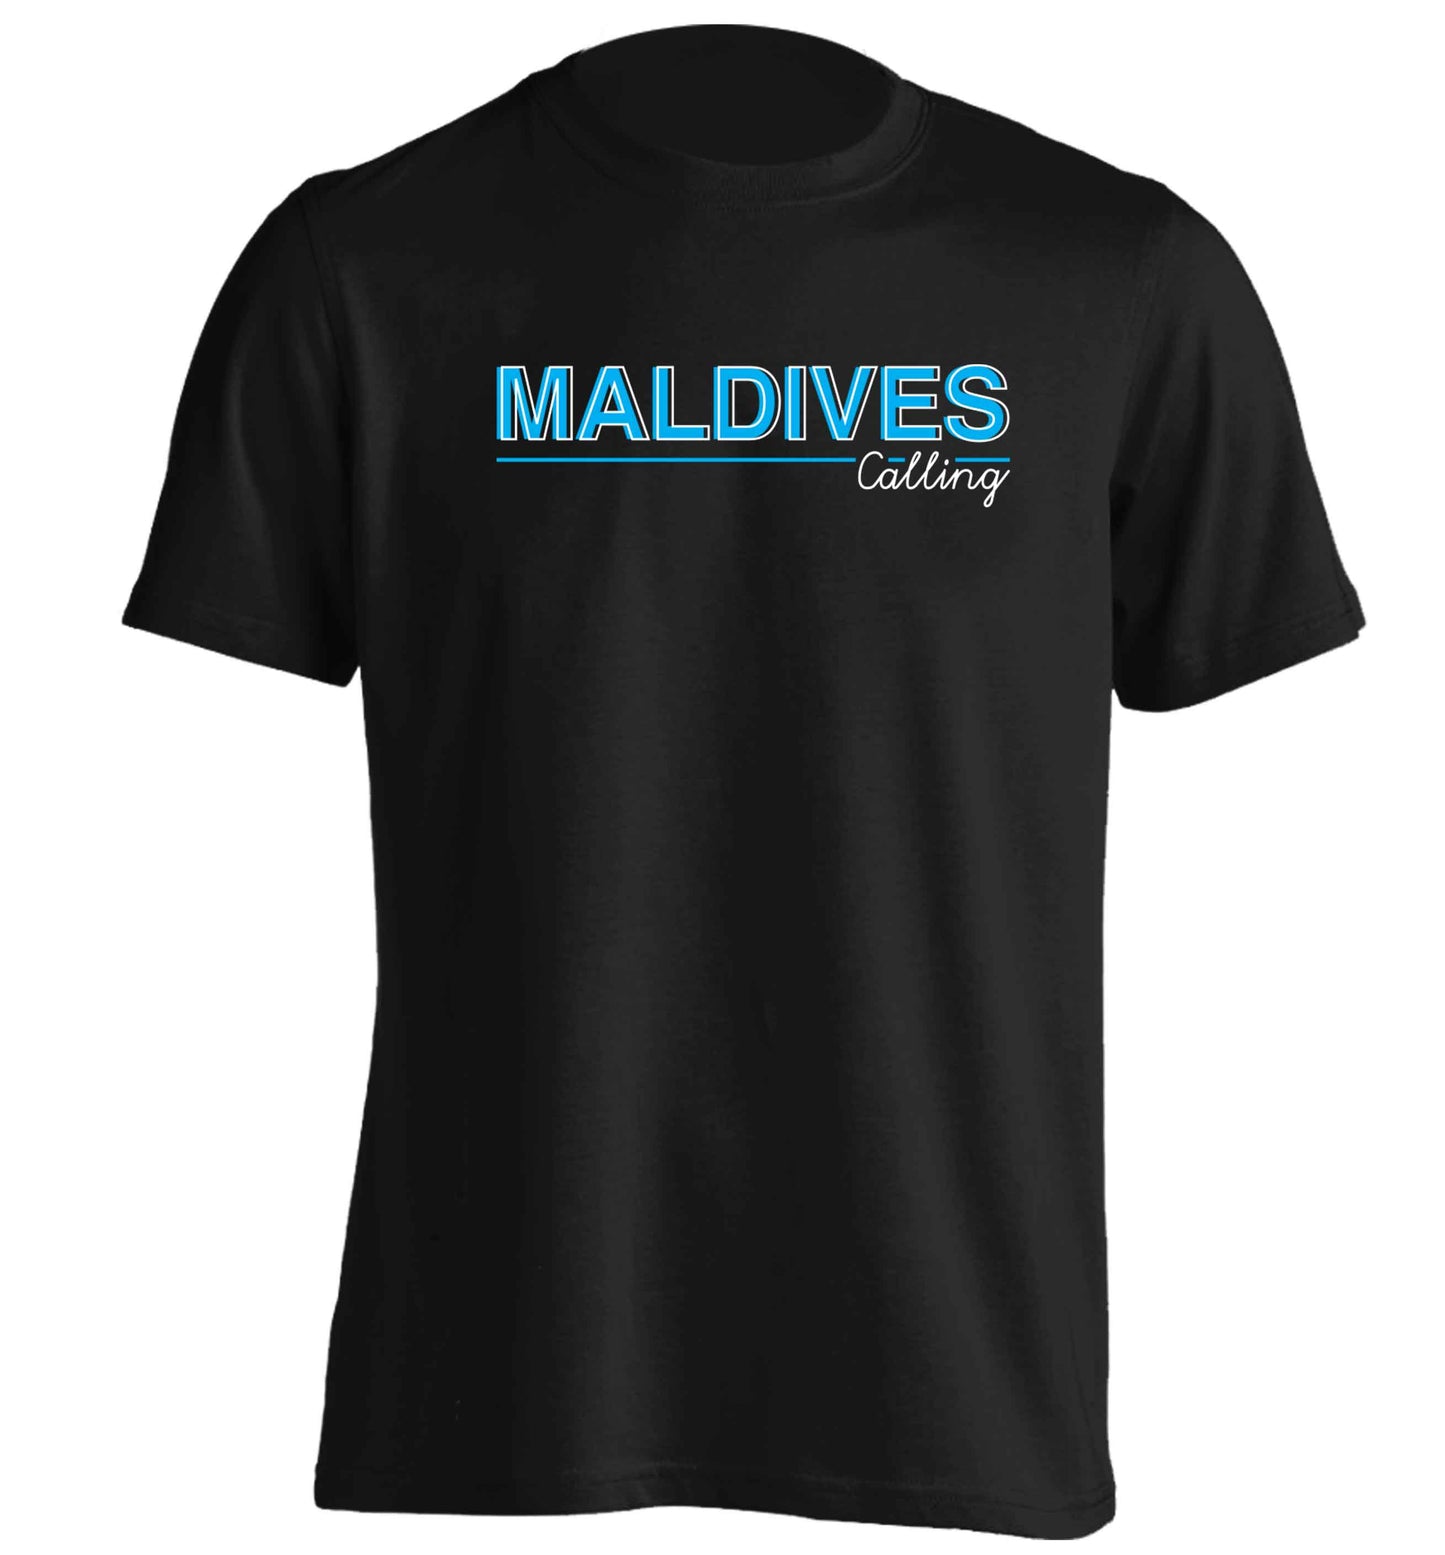 Maldives calling adults unisex black Tshirt 2XL